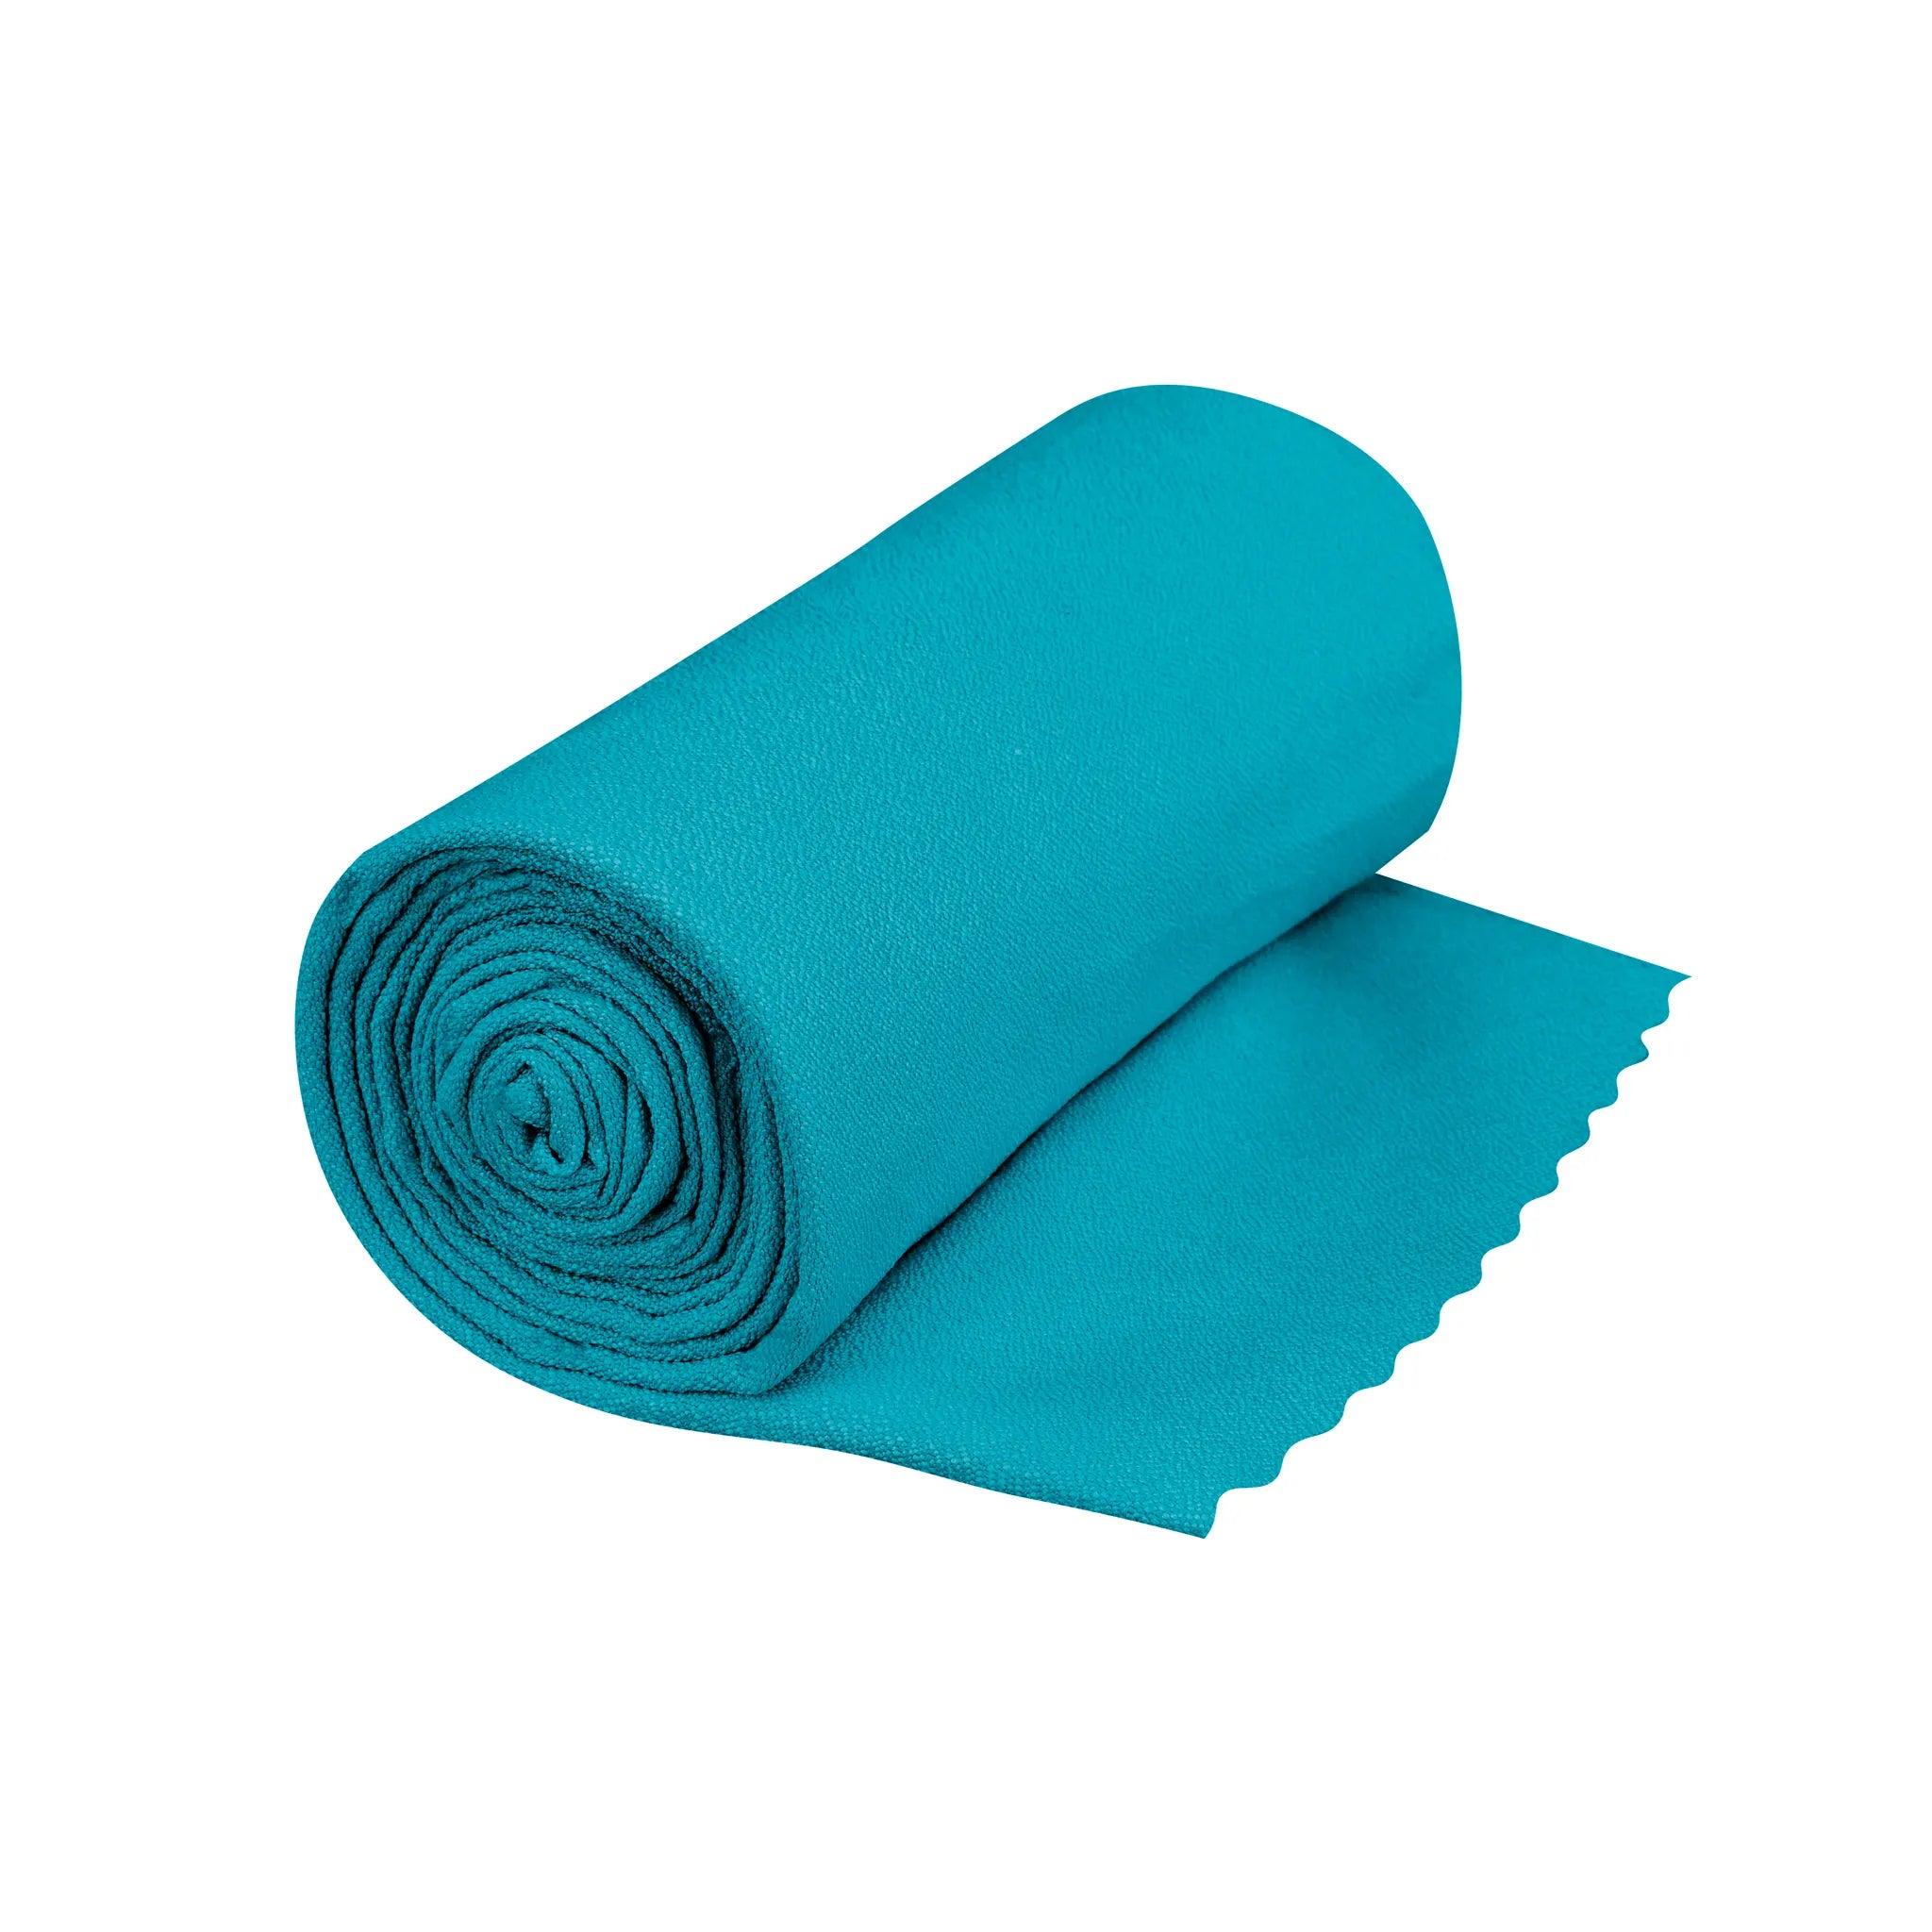 Airlite Towel - Pacific Blue XL